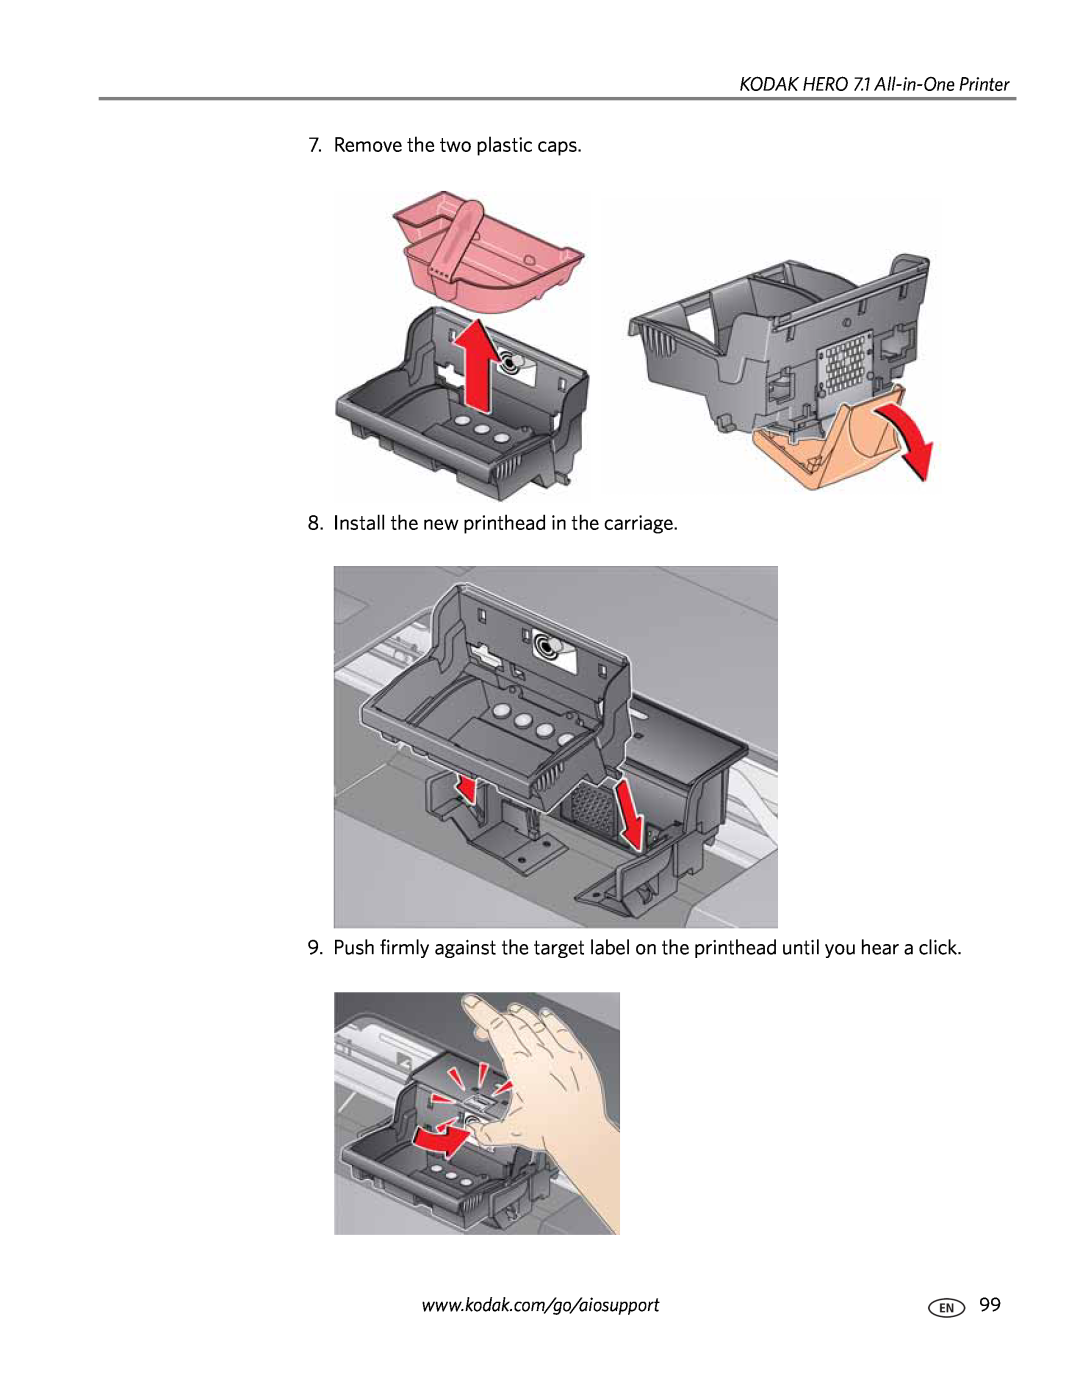 Kodak manual Remove the two plastic caps, Install the new printhead in the carriage, KODAK HERO 7.1 All-in-One Printer 